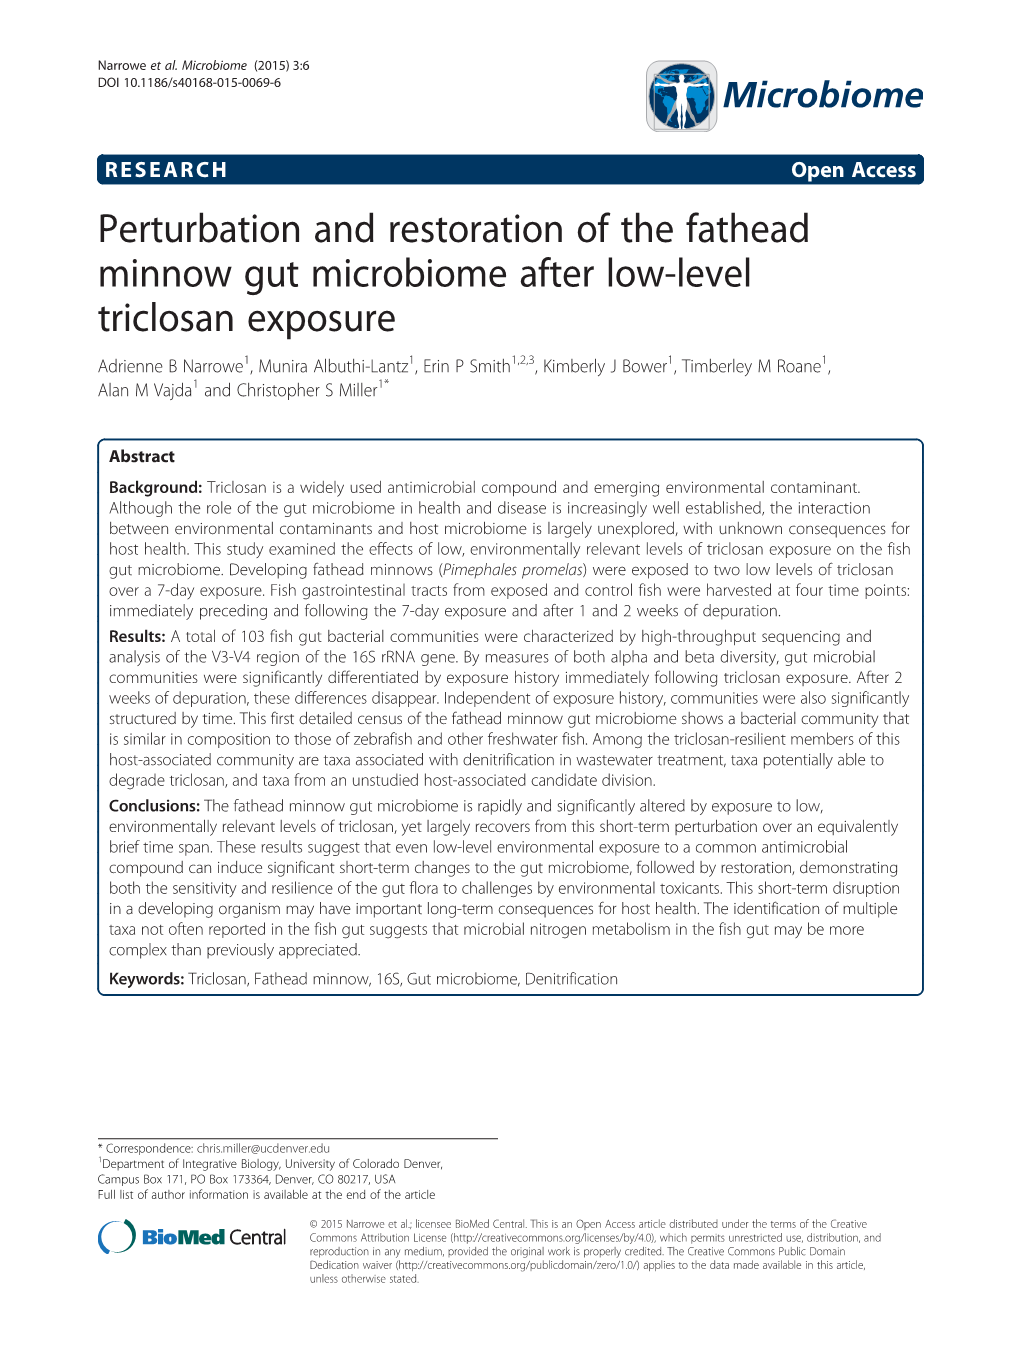 Perturbation and Restoration of the Fathead Minnow Gut Microbiome